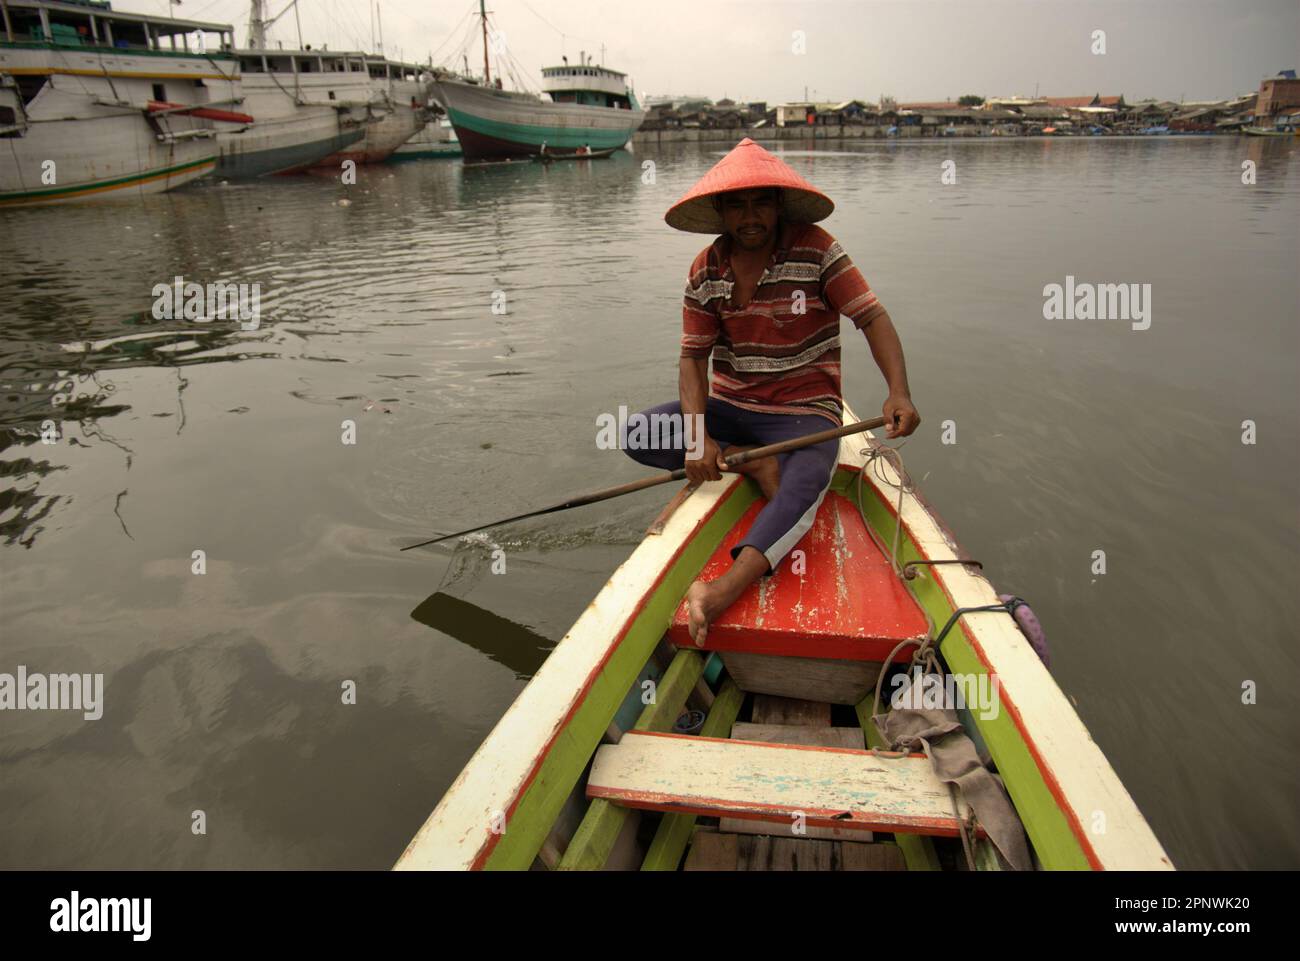 A man is steering a boat hired for coastal transportation, on coastal water at the traditional Sunda Kelapa Port in Penjaringan, North Jakarta, Jakarta, Indonesia. Stock Photo